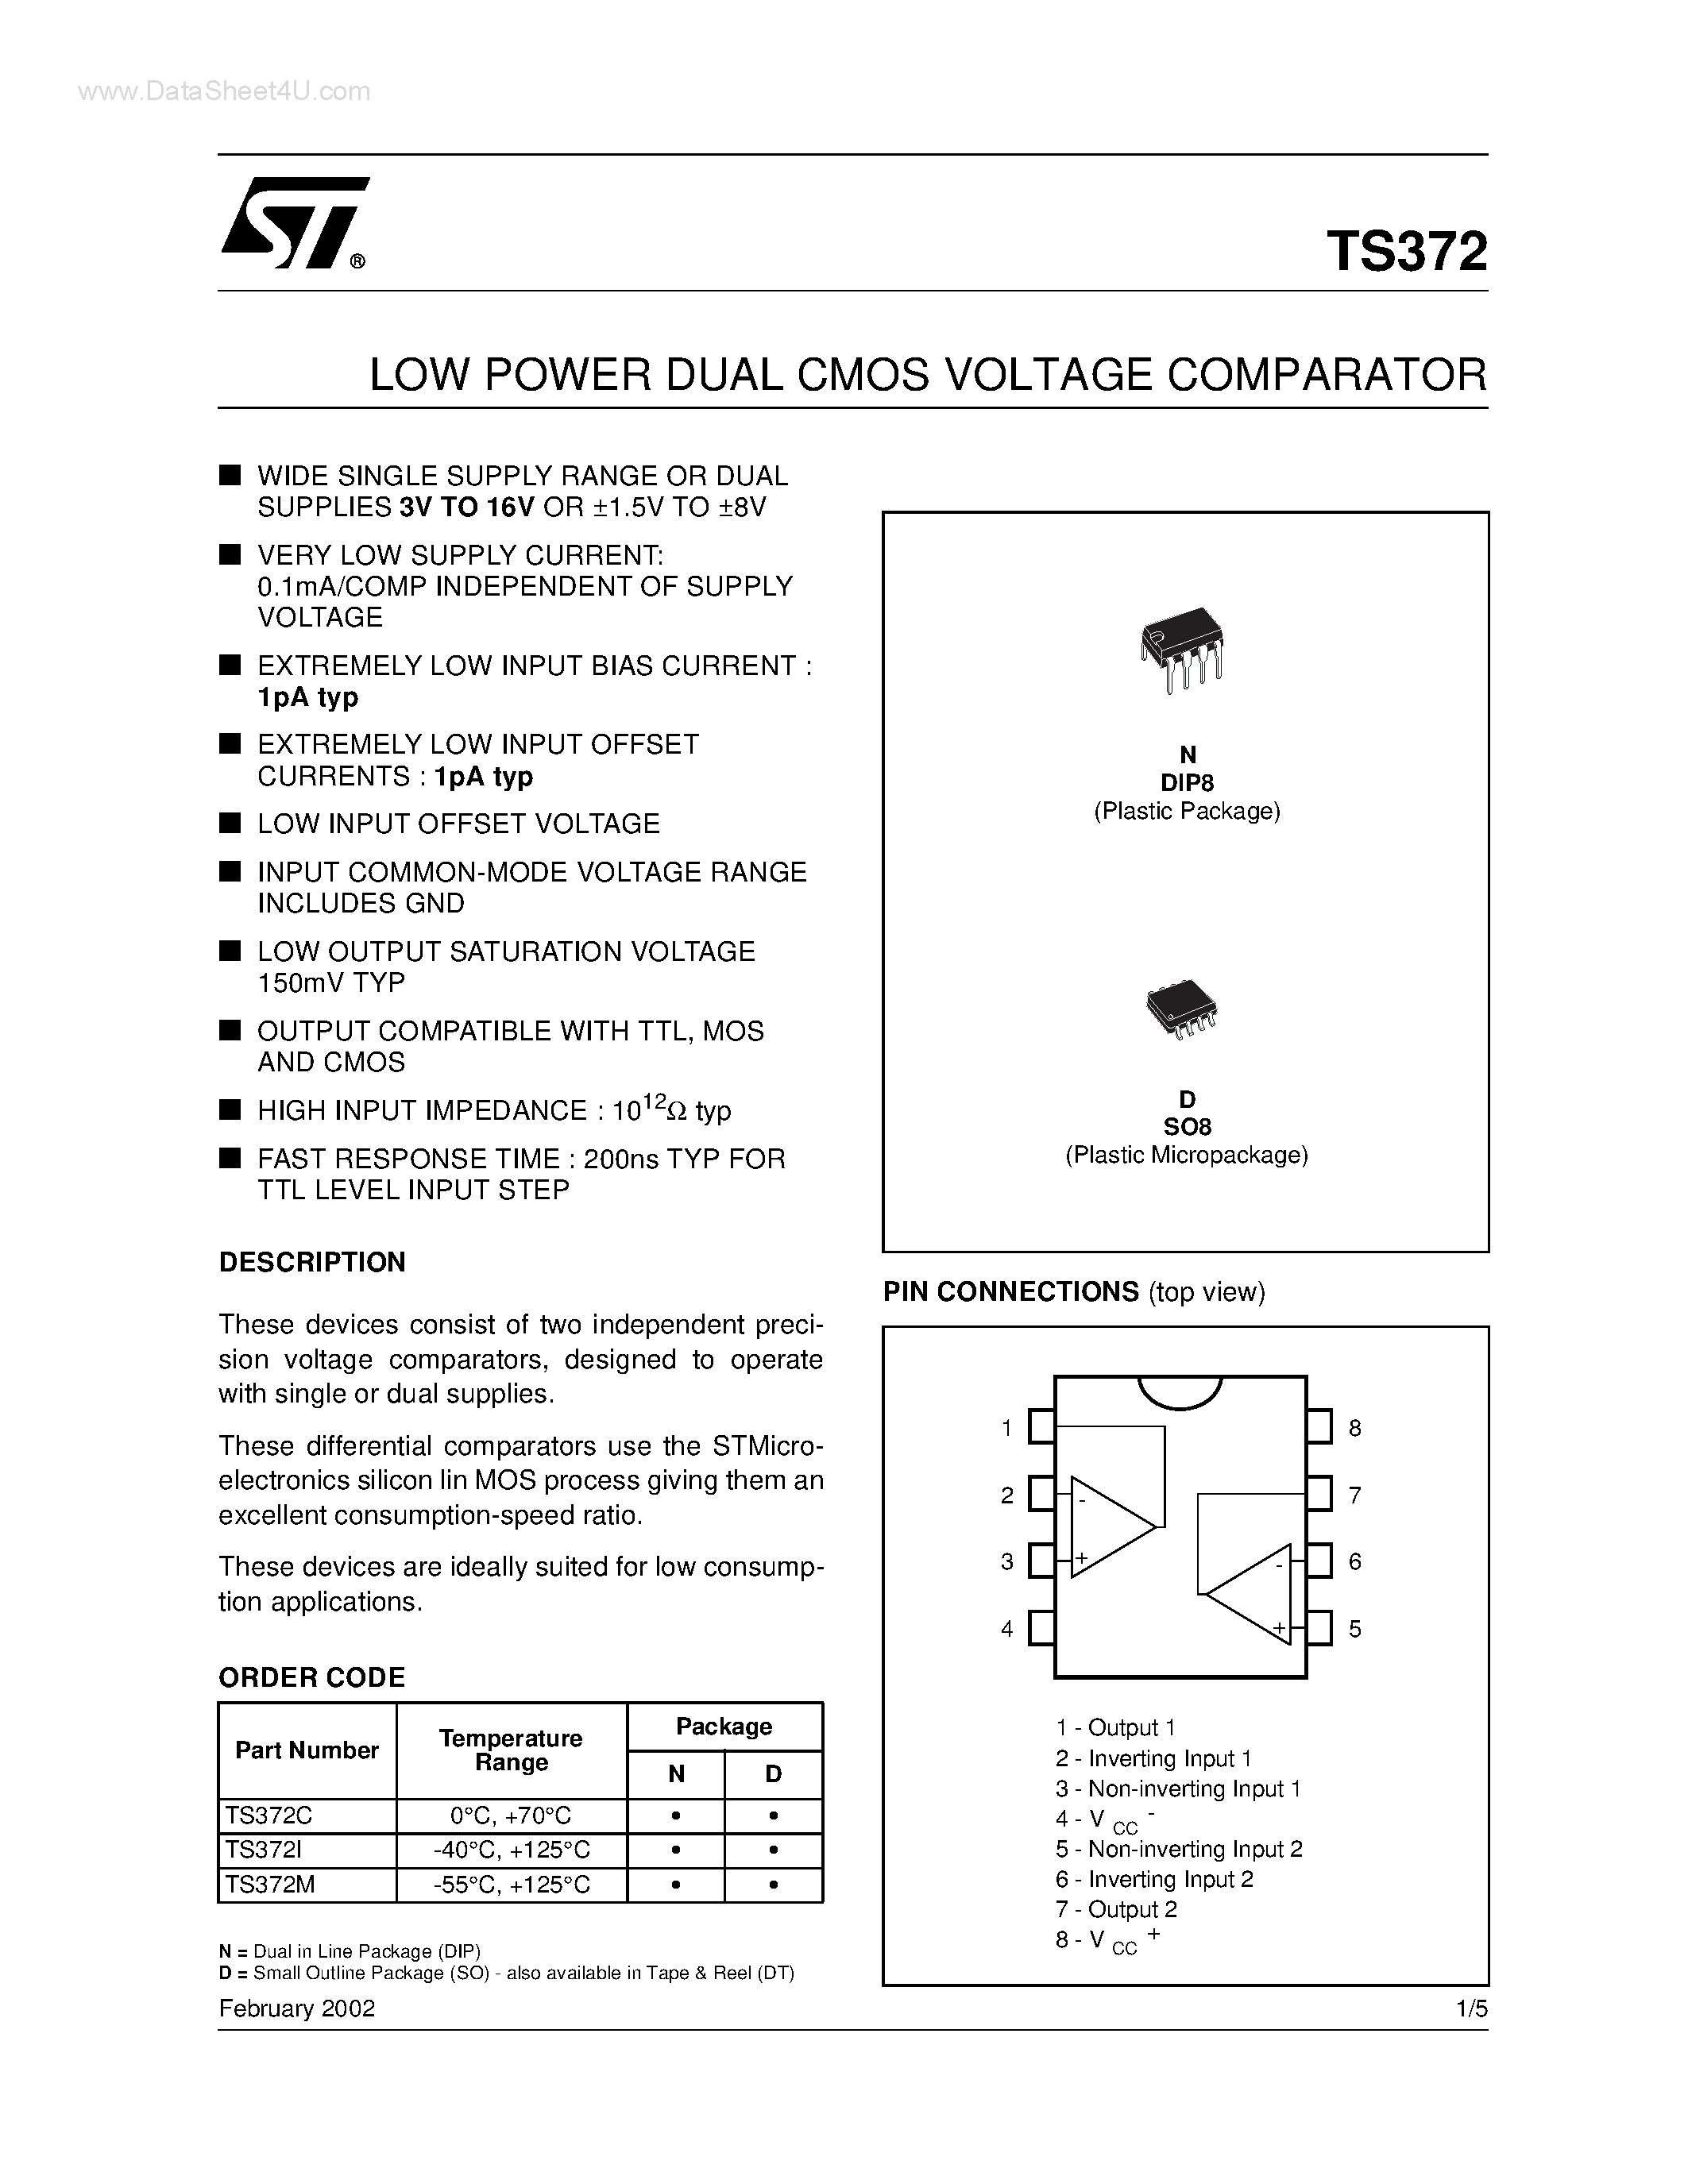 Даташит TS372 - LOW POWER DUAL CMOS VOLTAGE COMPARATOR страница 1